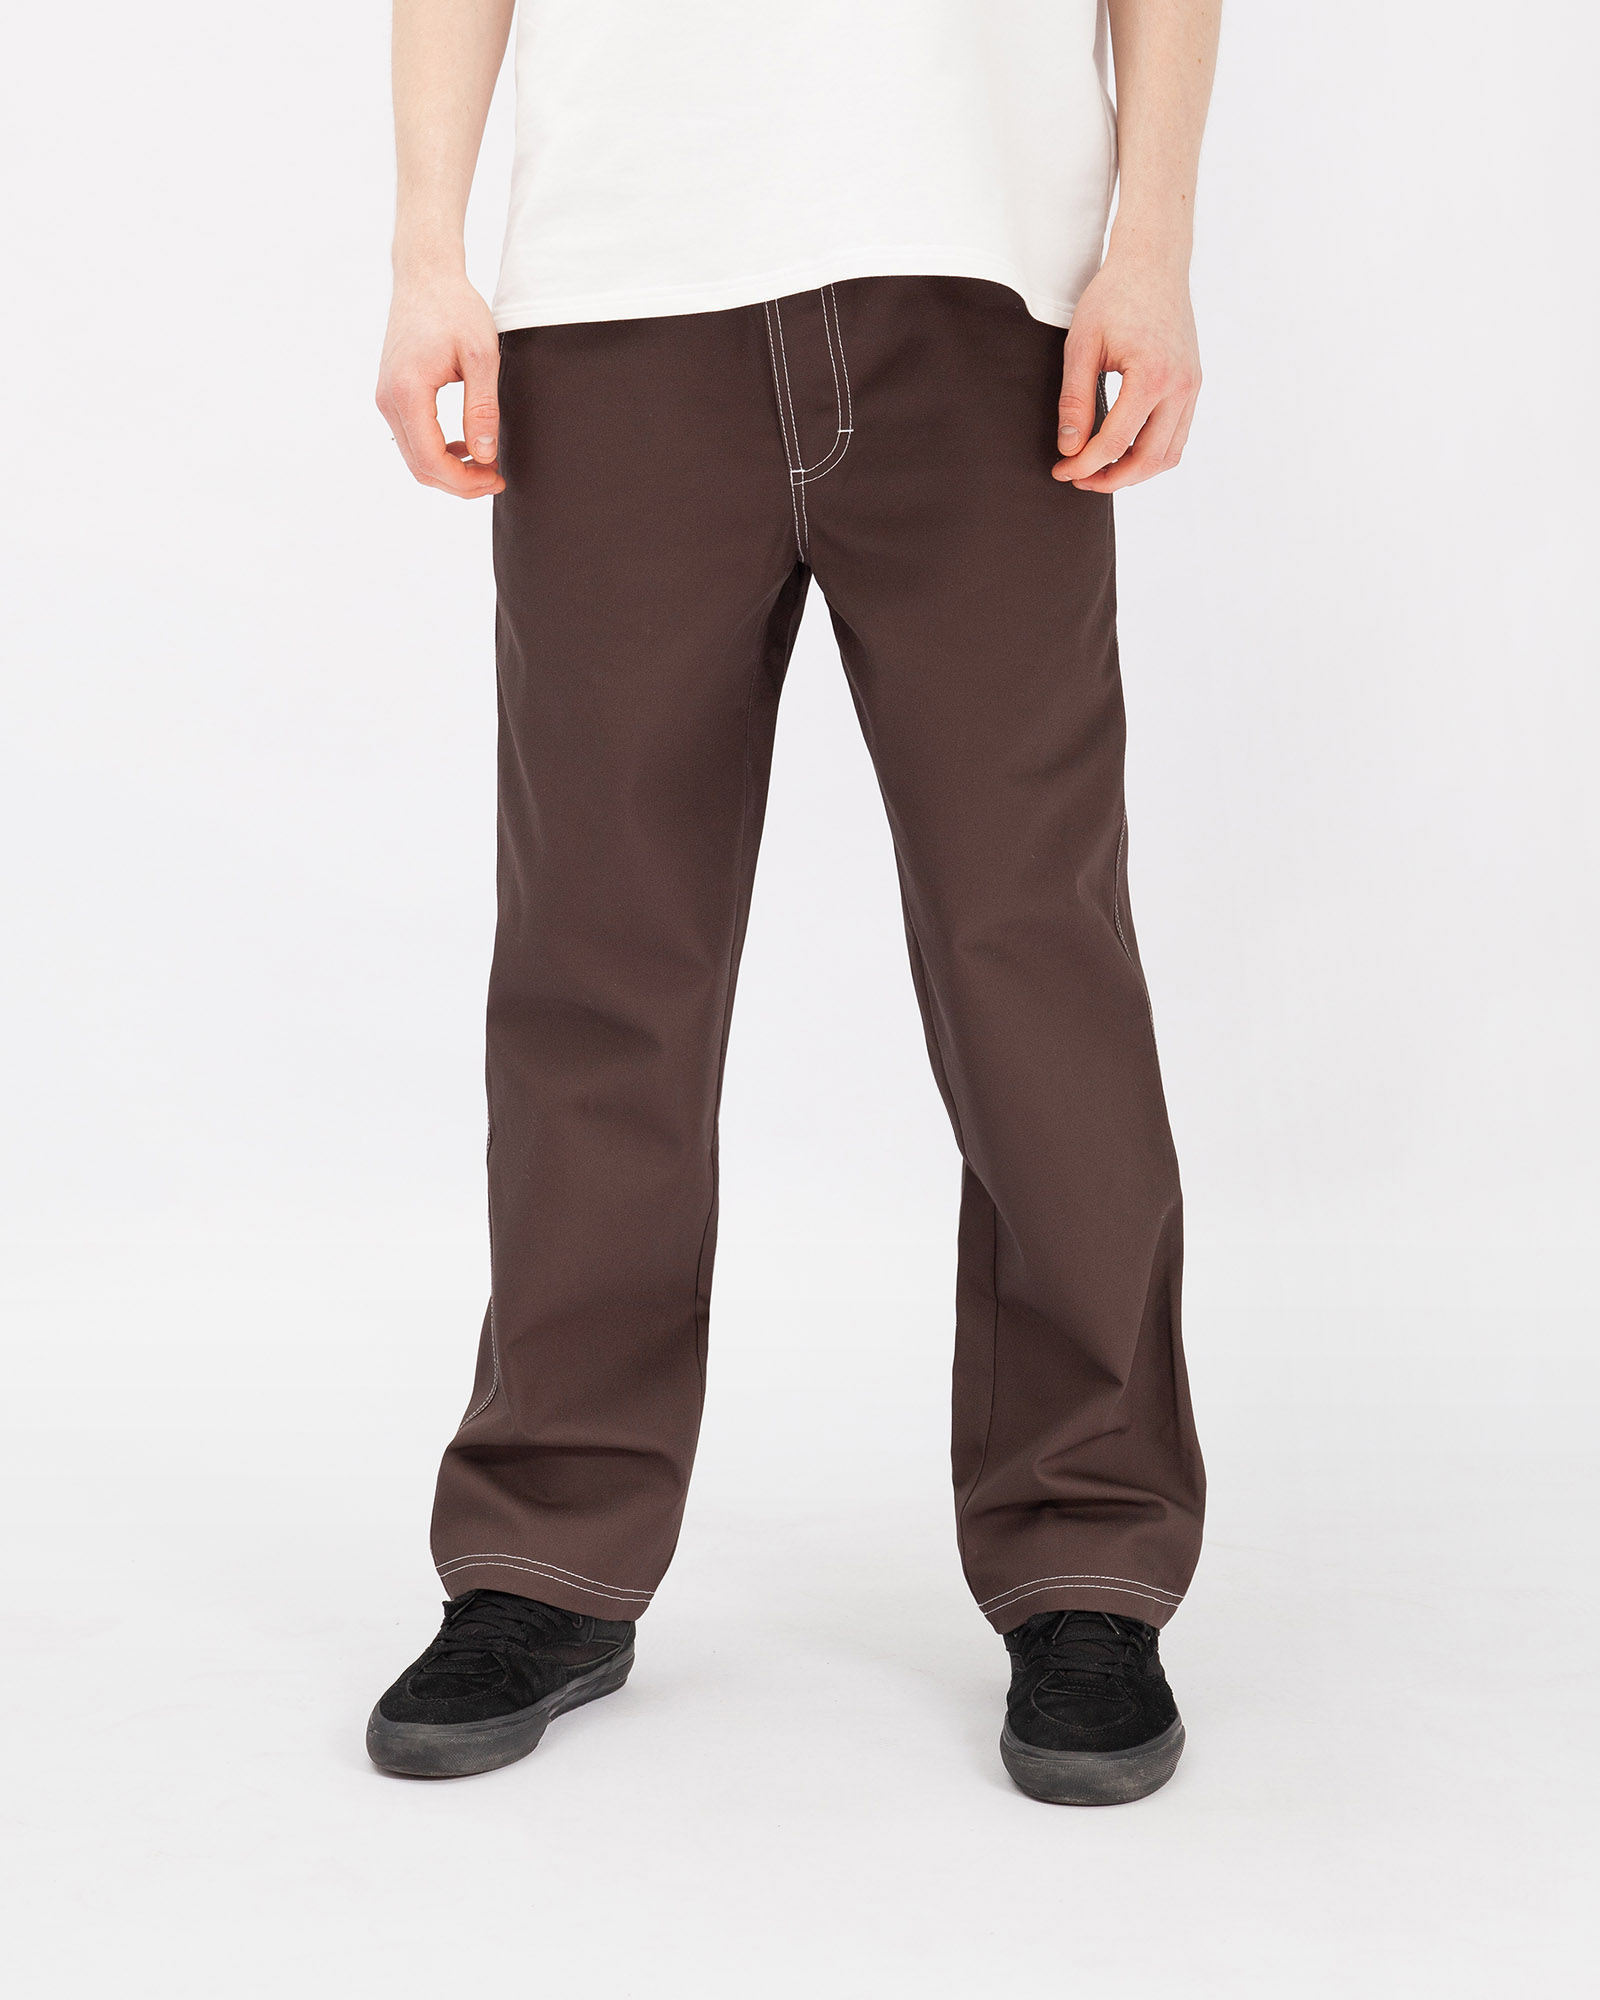 Брюки Anteater Streetpants (коричневый)